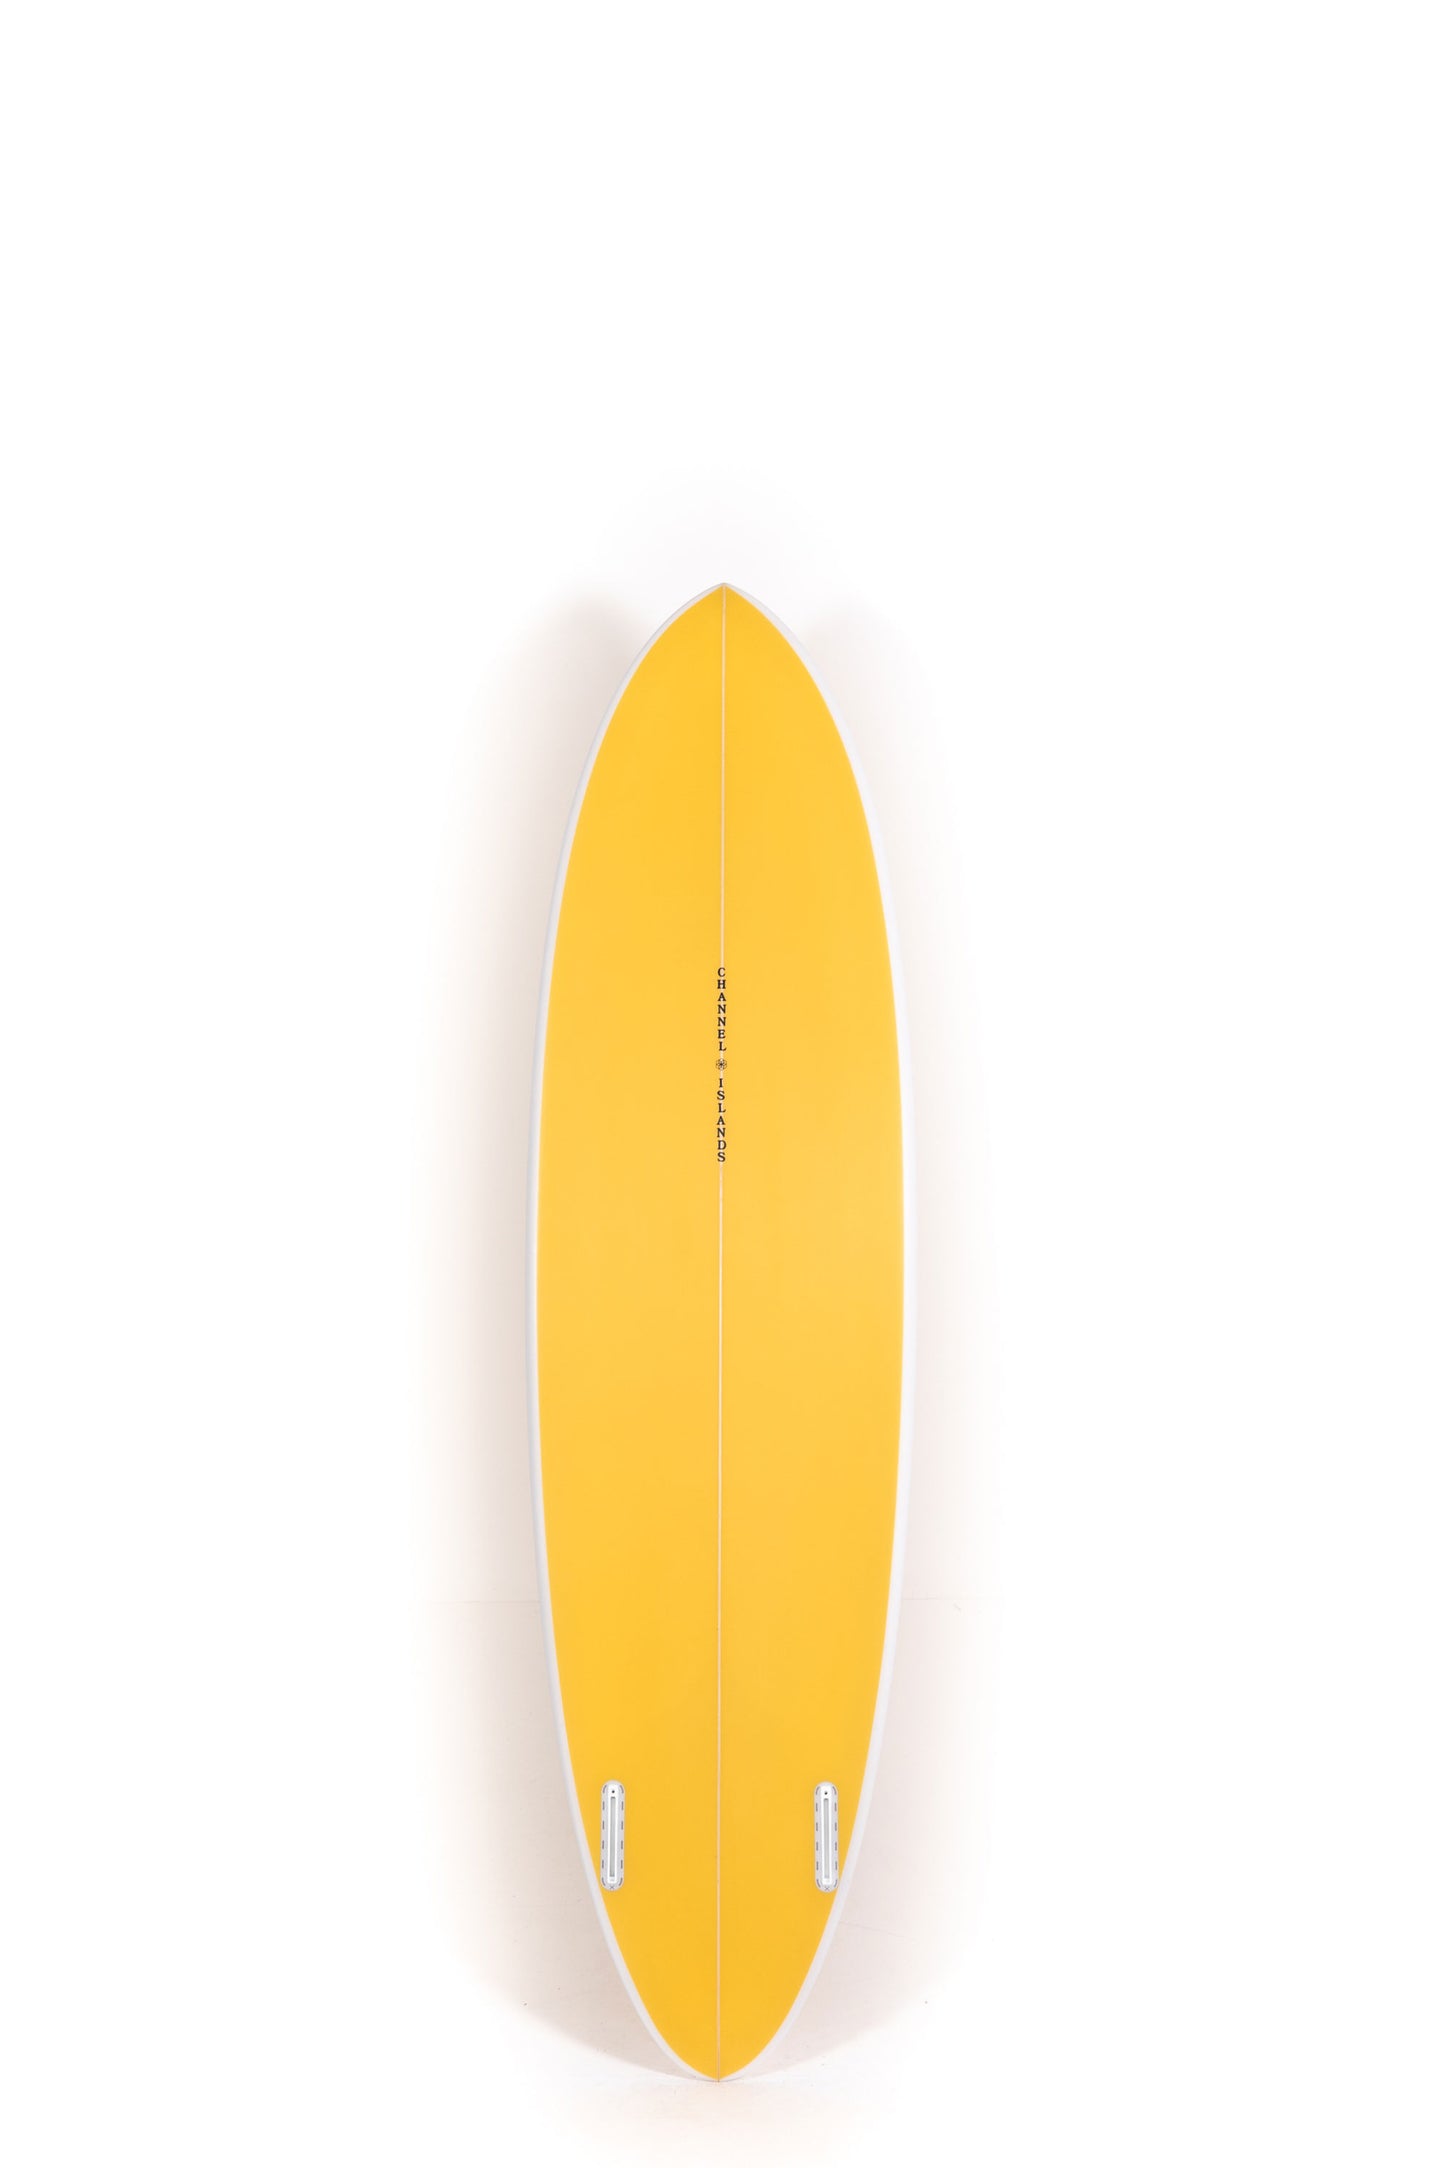 CHANNEL ISLANDS SURFBOARDS | Shop at PUKAS SURF SHOP – Page 2